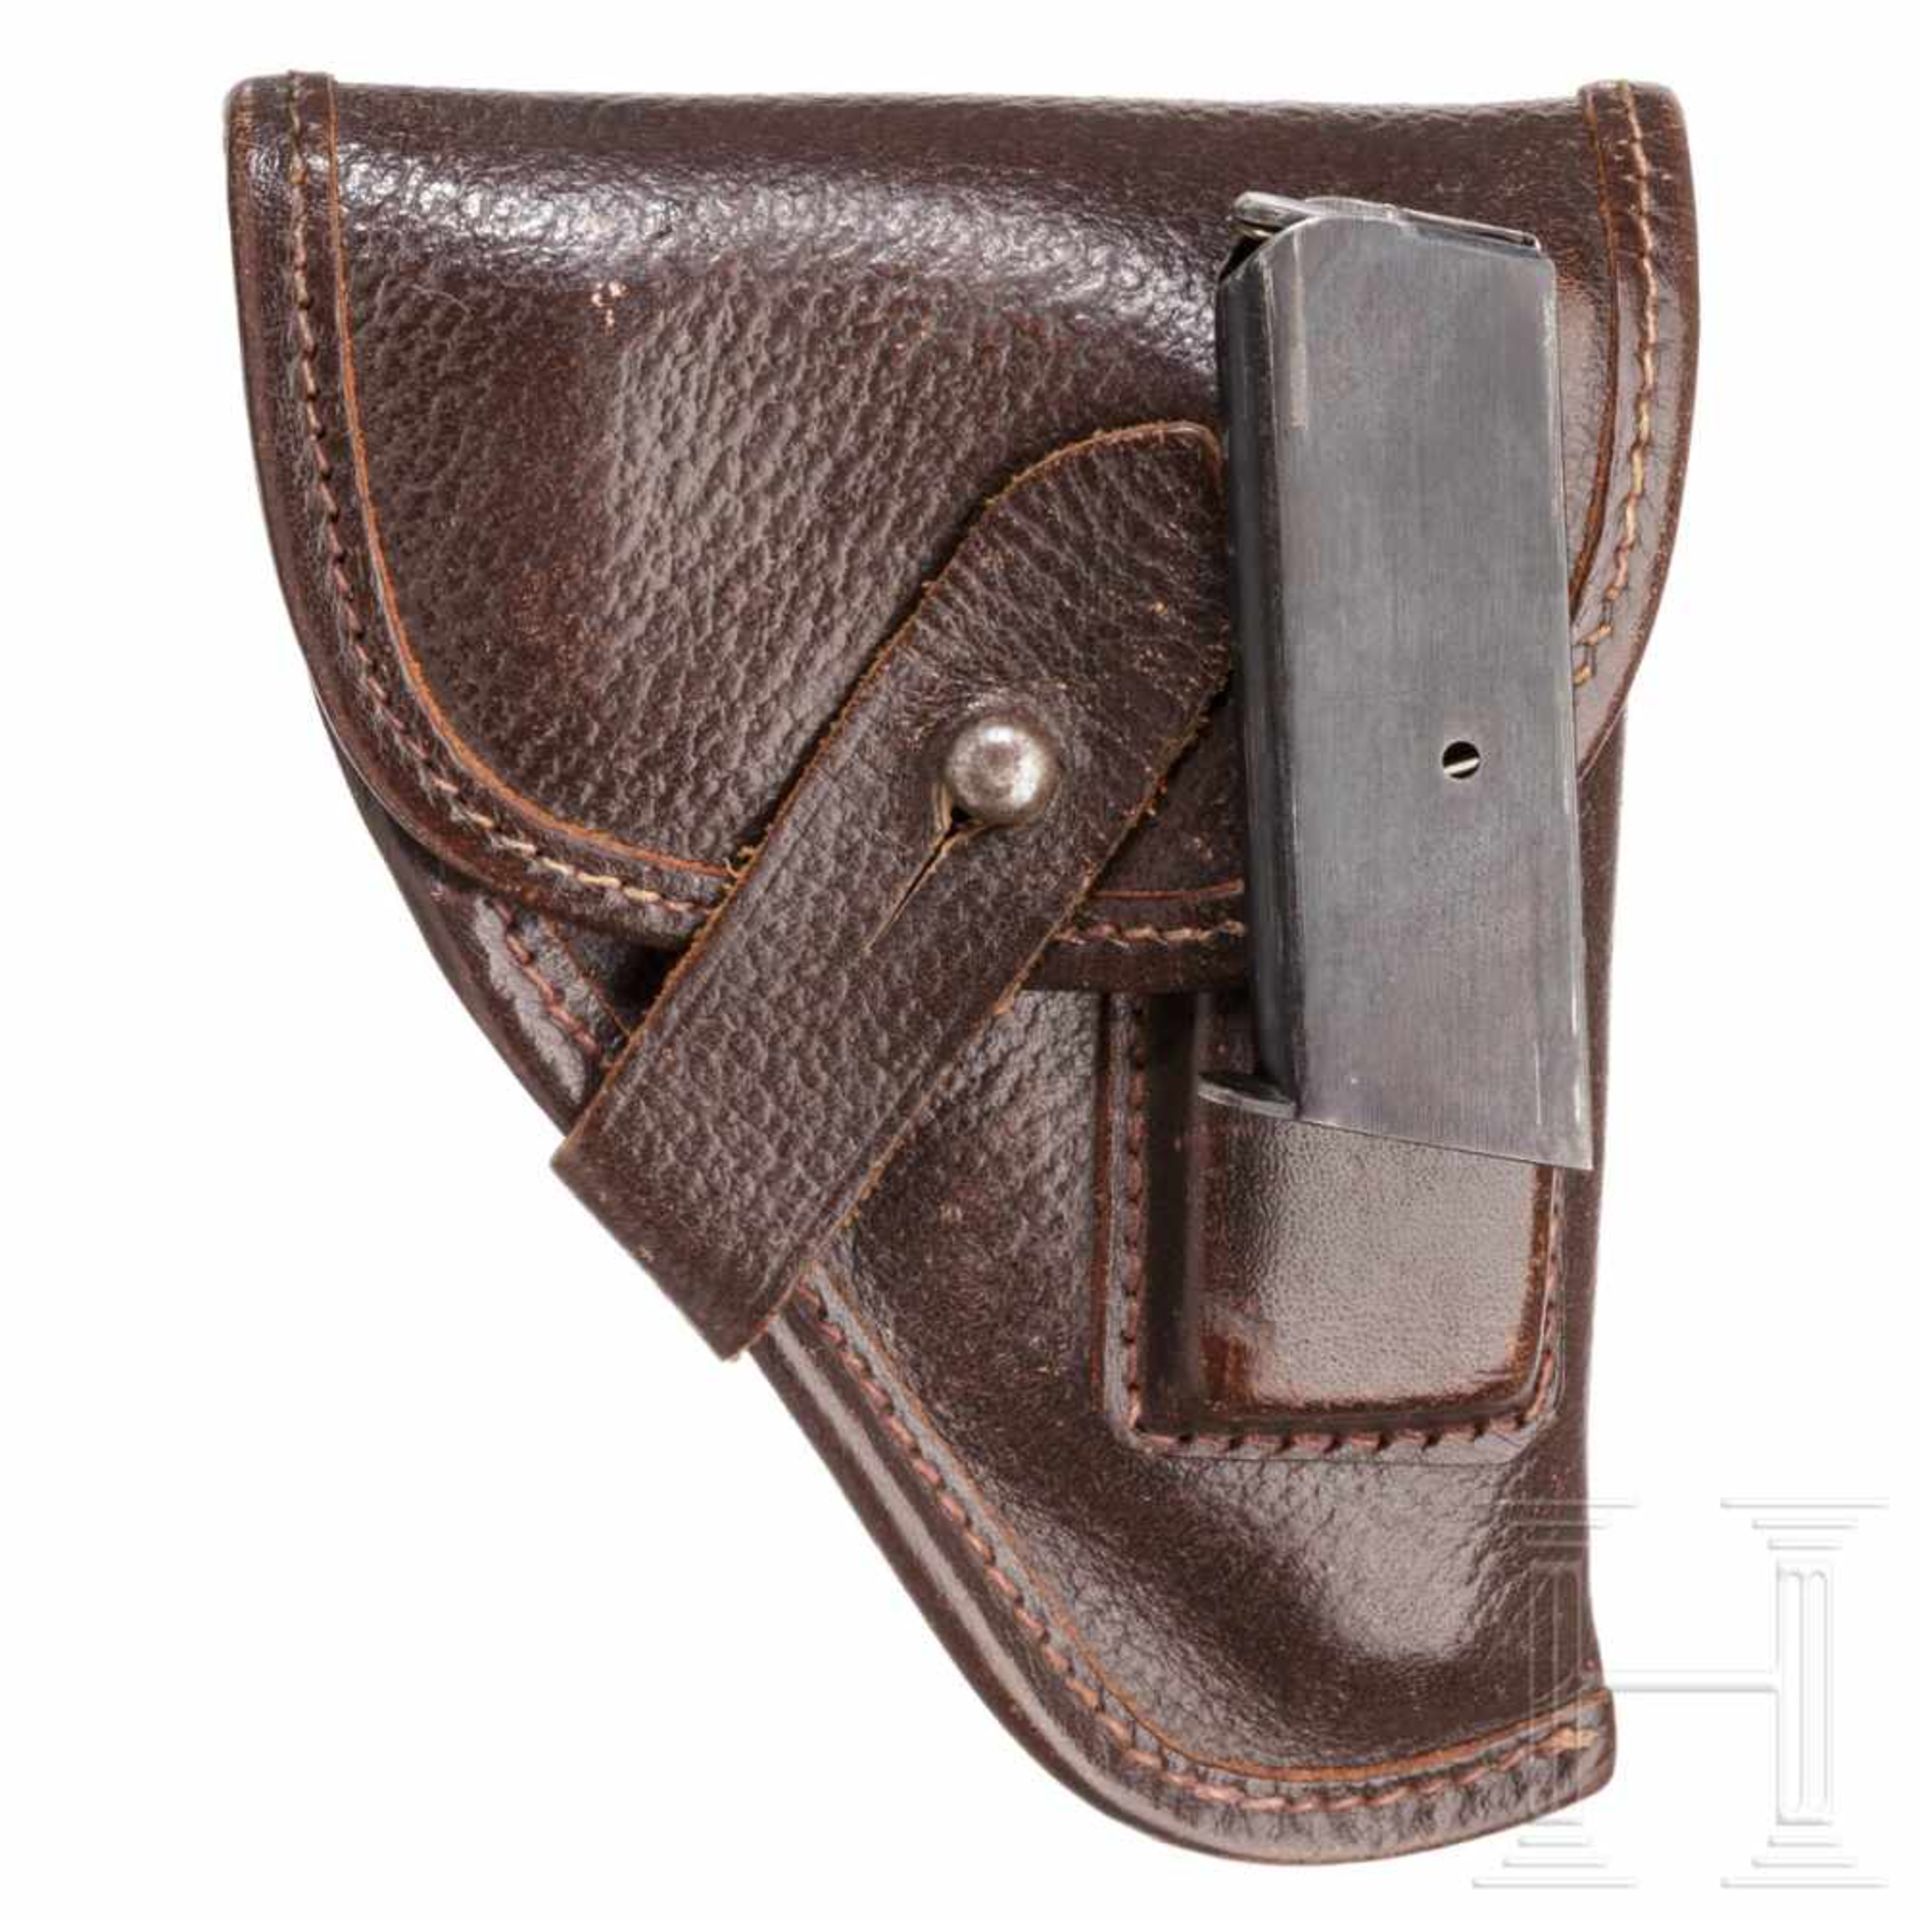 A Stock pocket pistol with holsterKal. 6,35 mm Brown., Nr. 2164, nummerngleich. Blanker Lauf. - Bild 3 aus 4